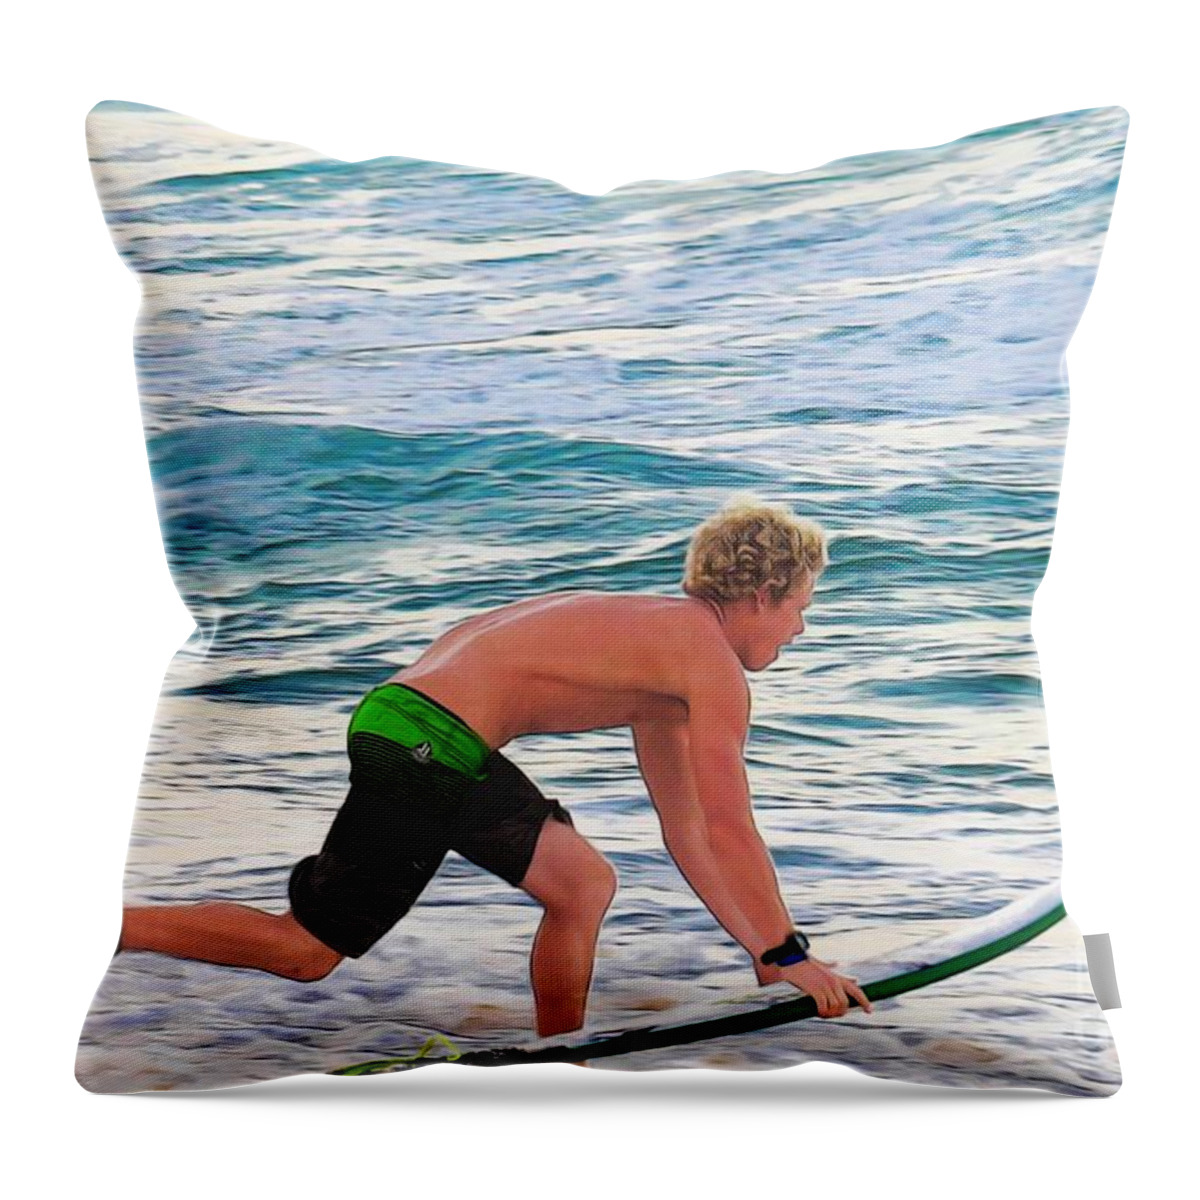 John John Florence-pro Surfer Throw Pillow featuring the photograph John John Florence - Surfing Pro by Scott Cameron